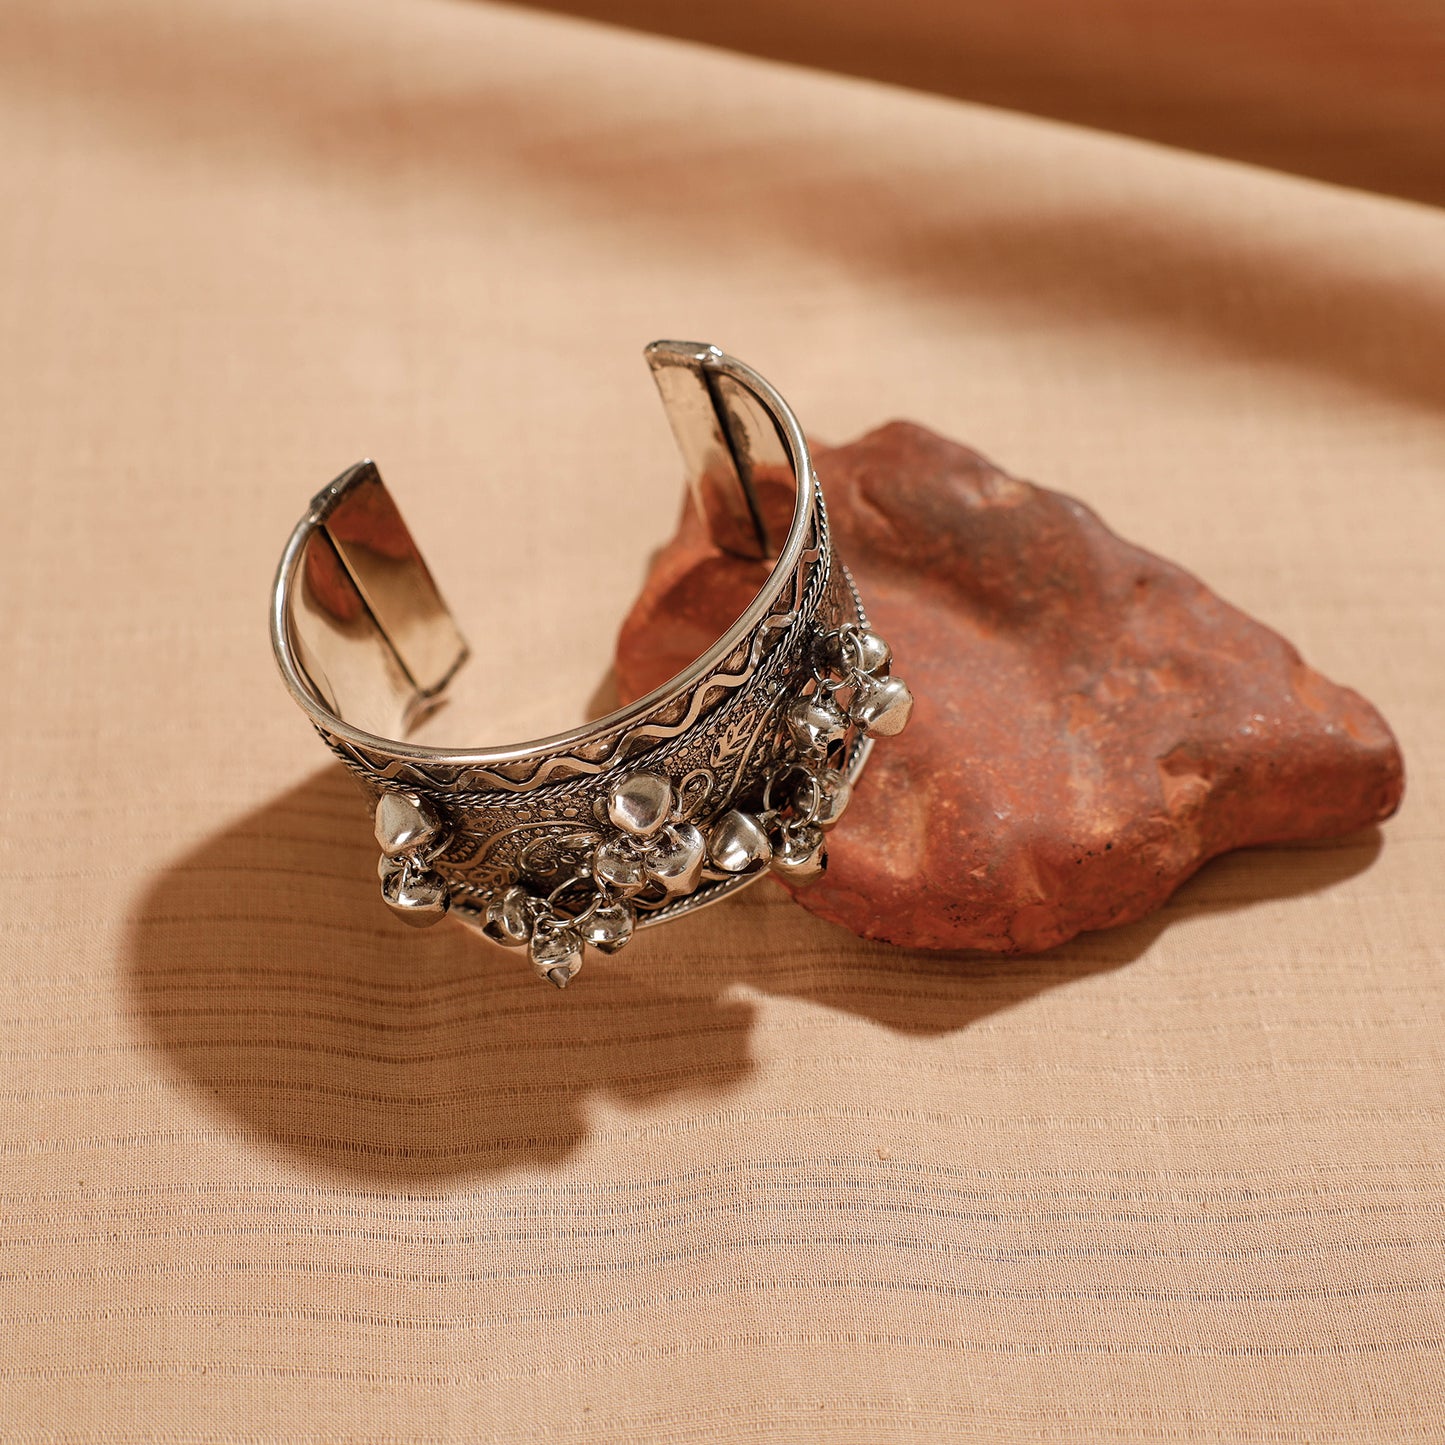 Antique Finish Oxidised German Silver Bangle / Cuff Bracelet (Adjustable)